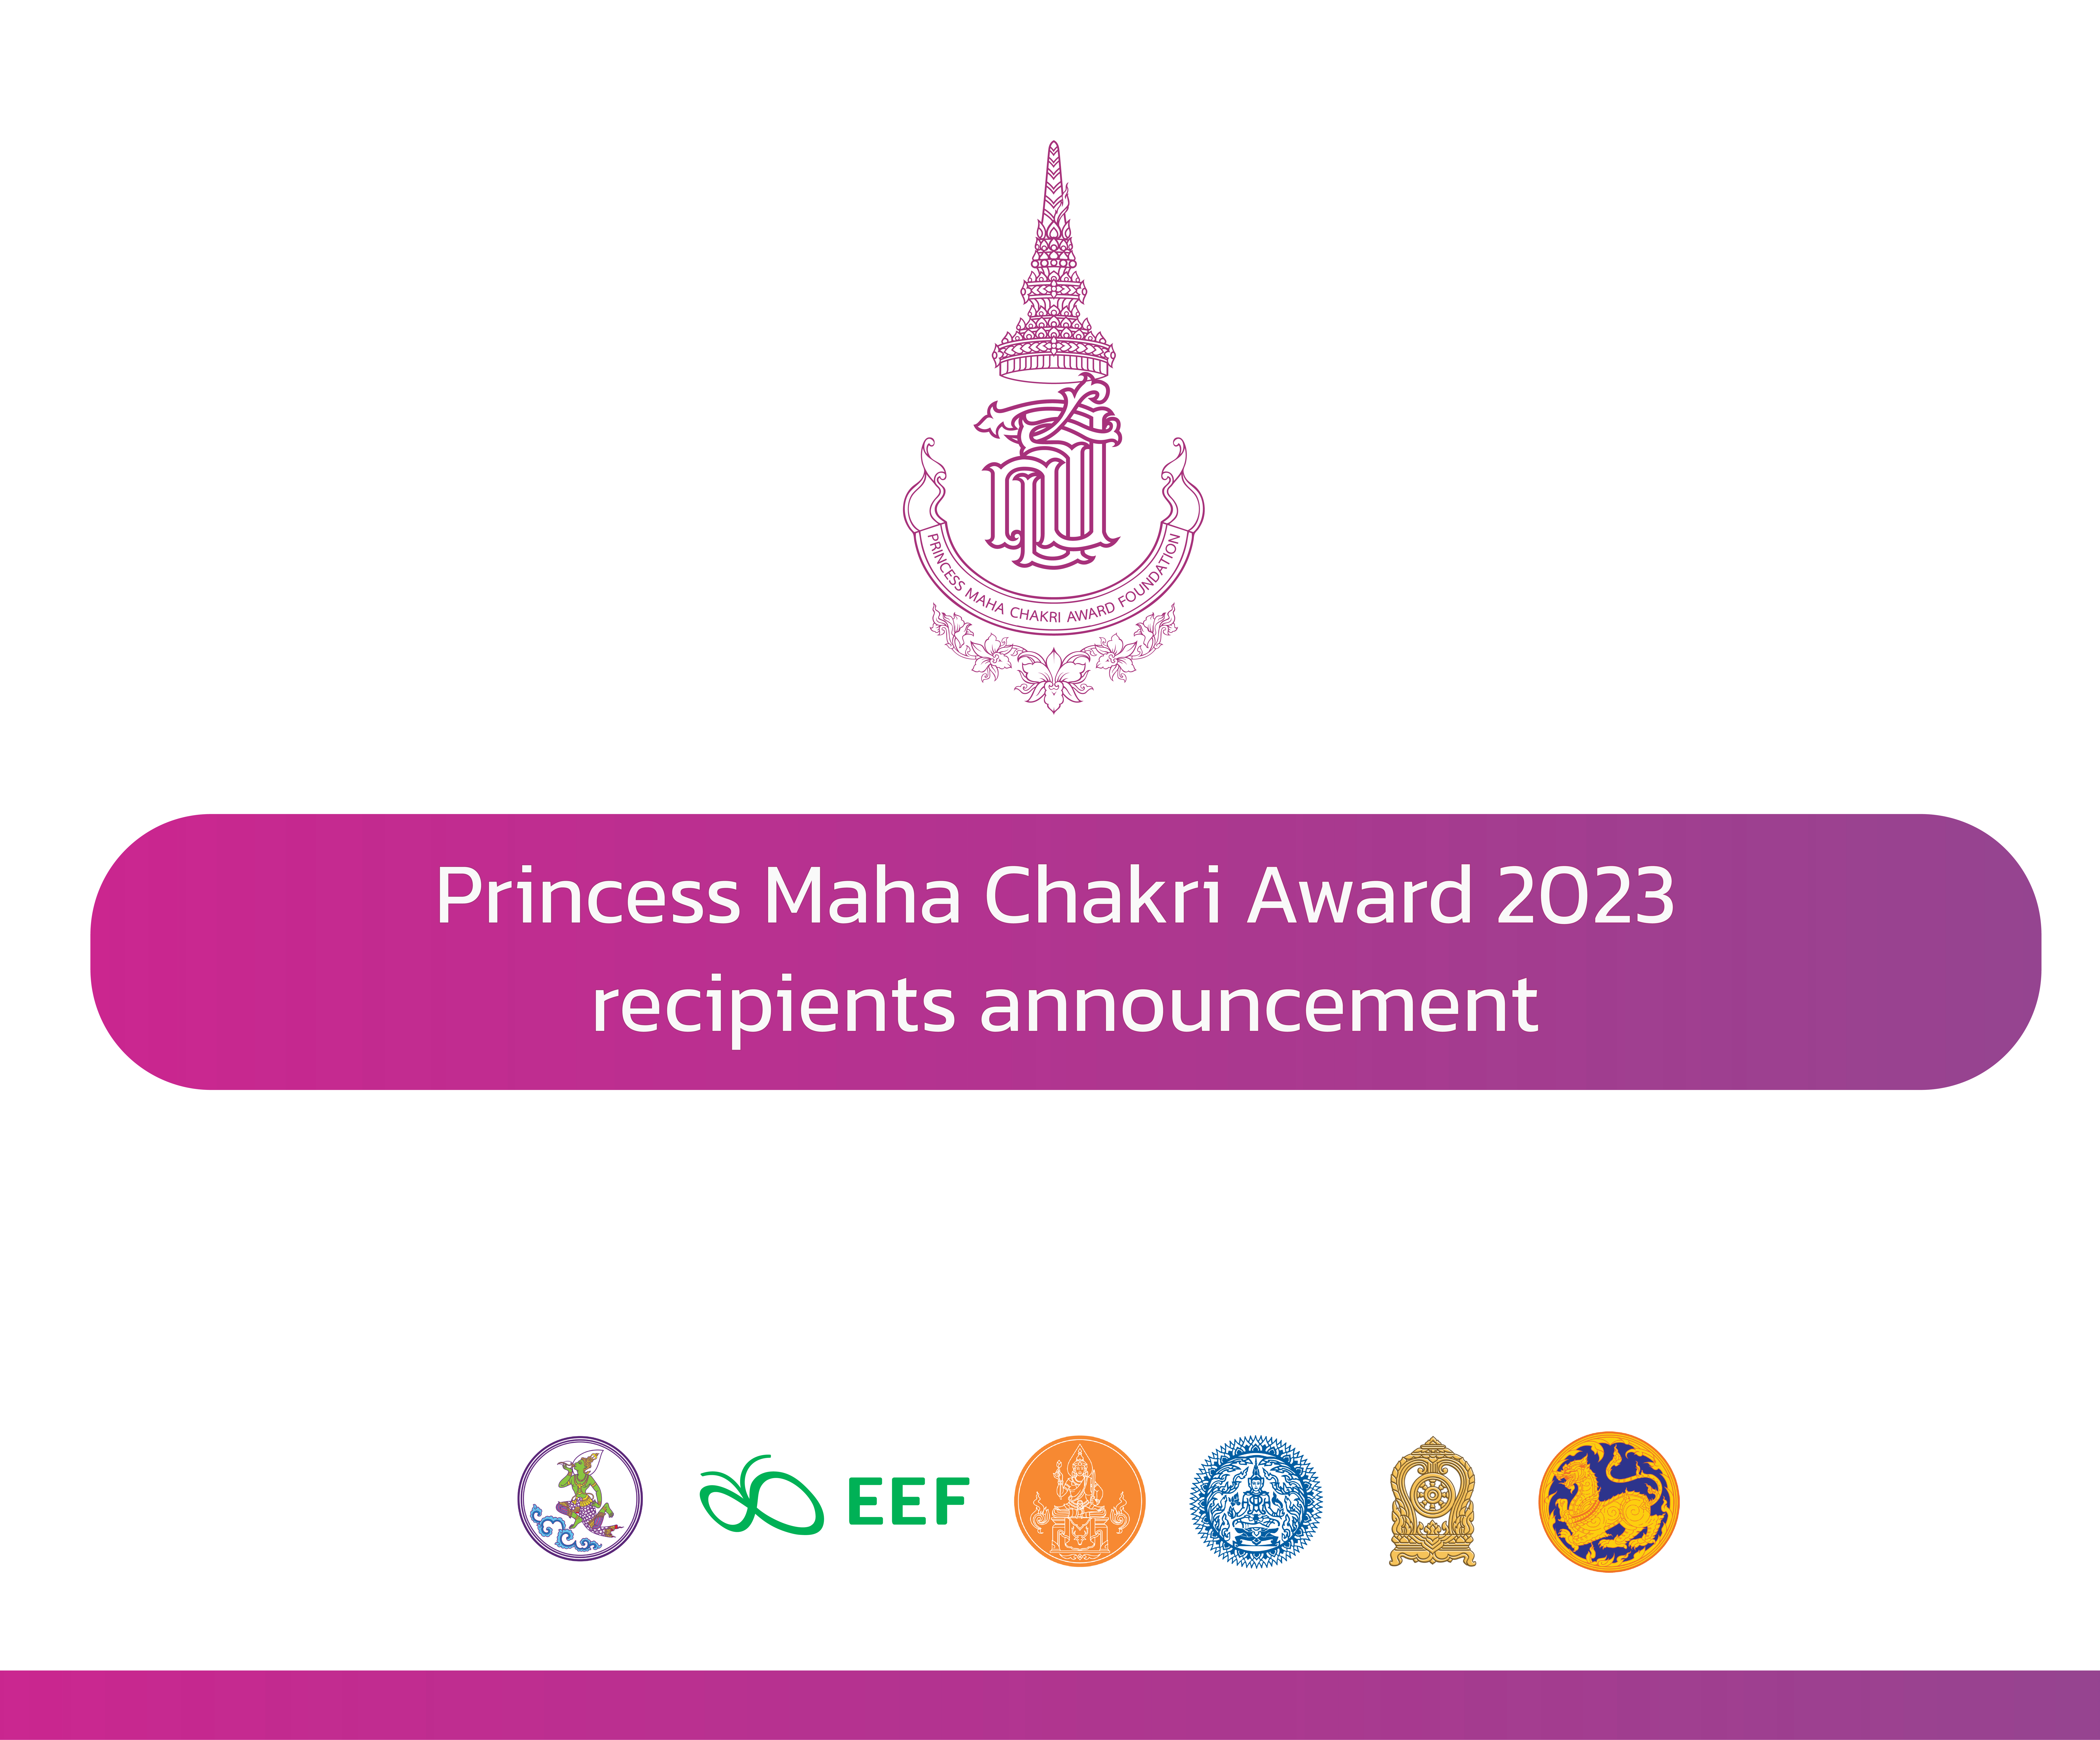 Princess Maha Chakri Award 2023 recipients announcement